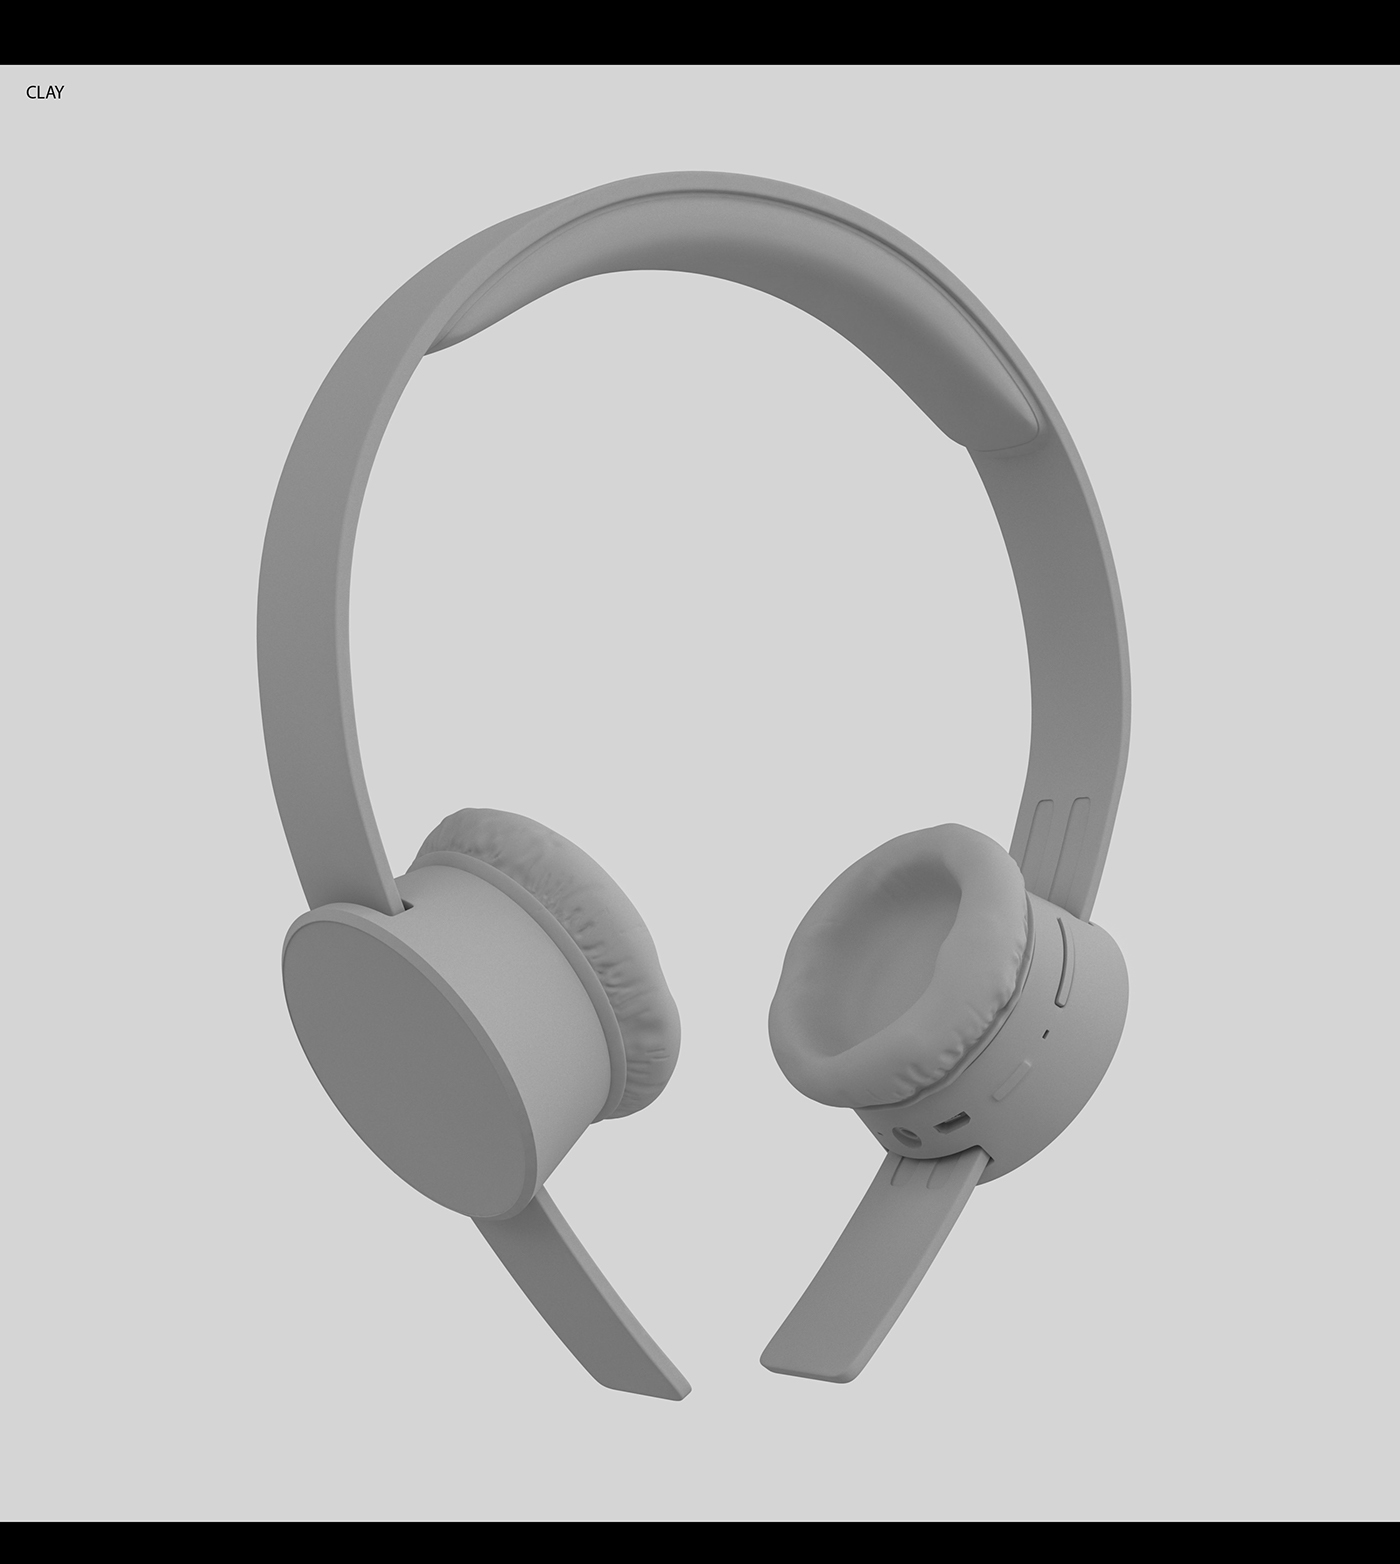 headphone SOL REPUBLIC motorola 3D Render clay